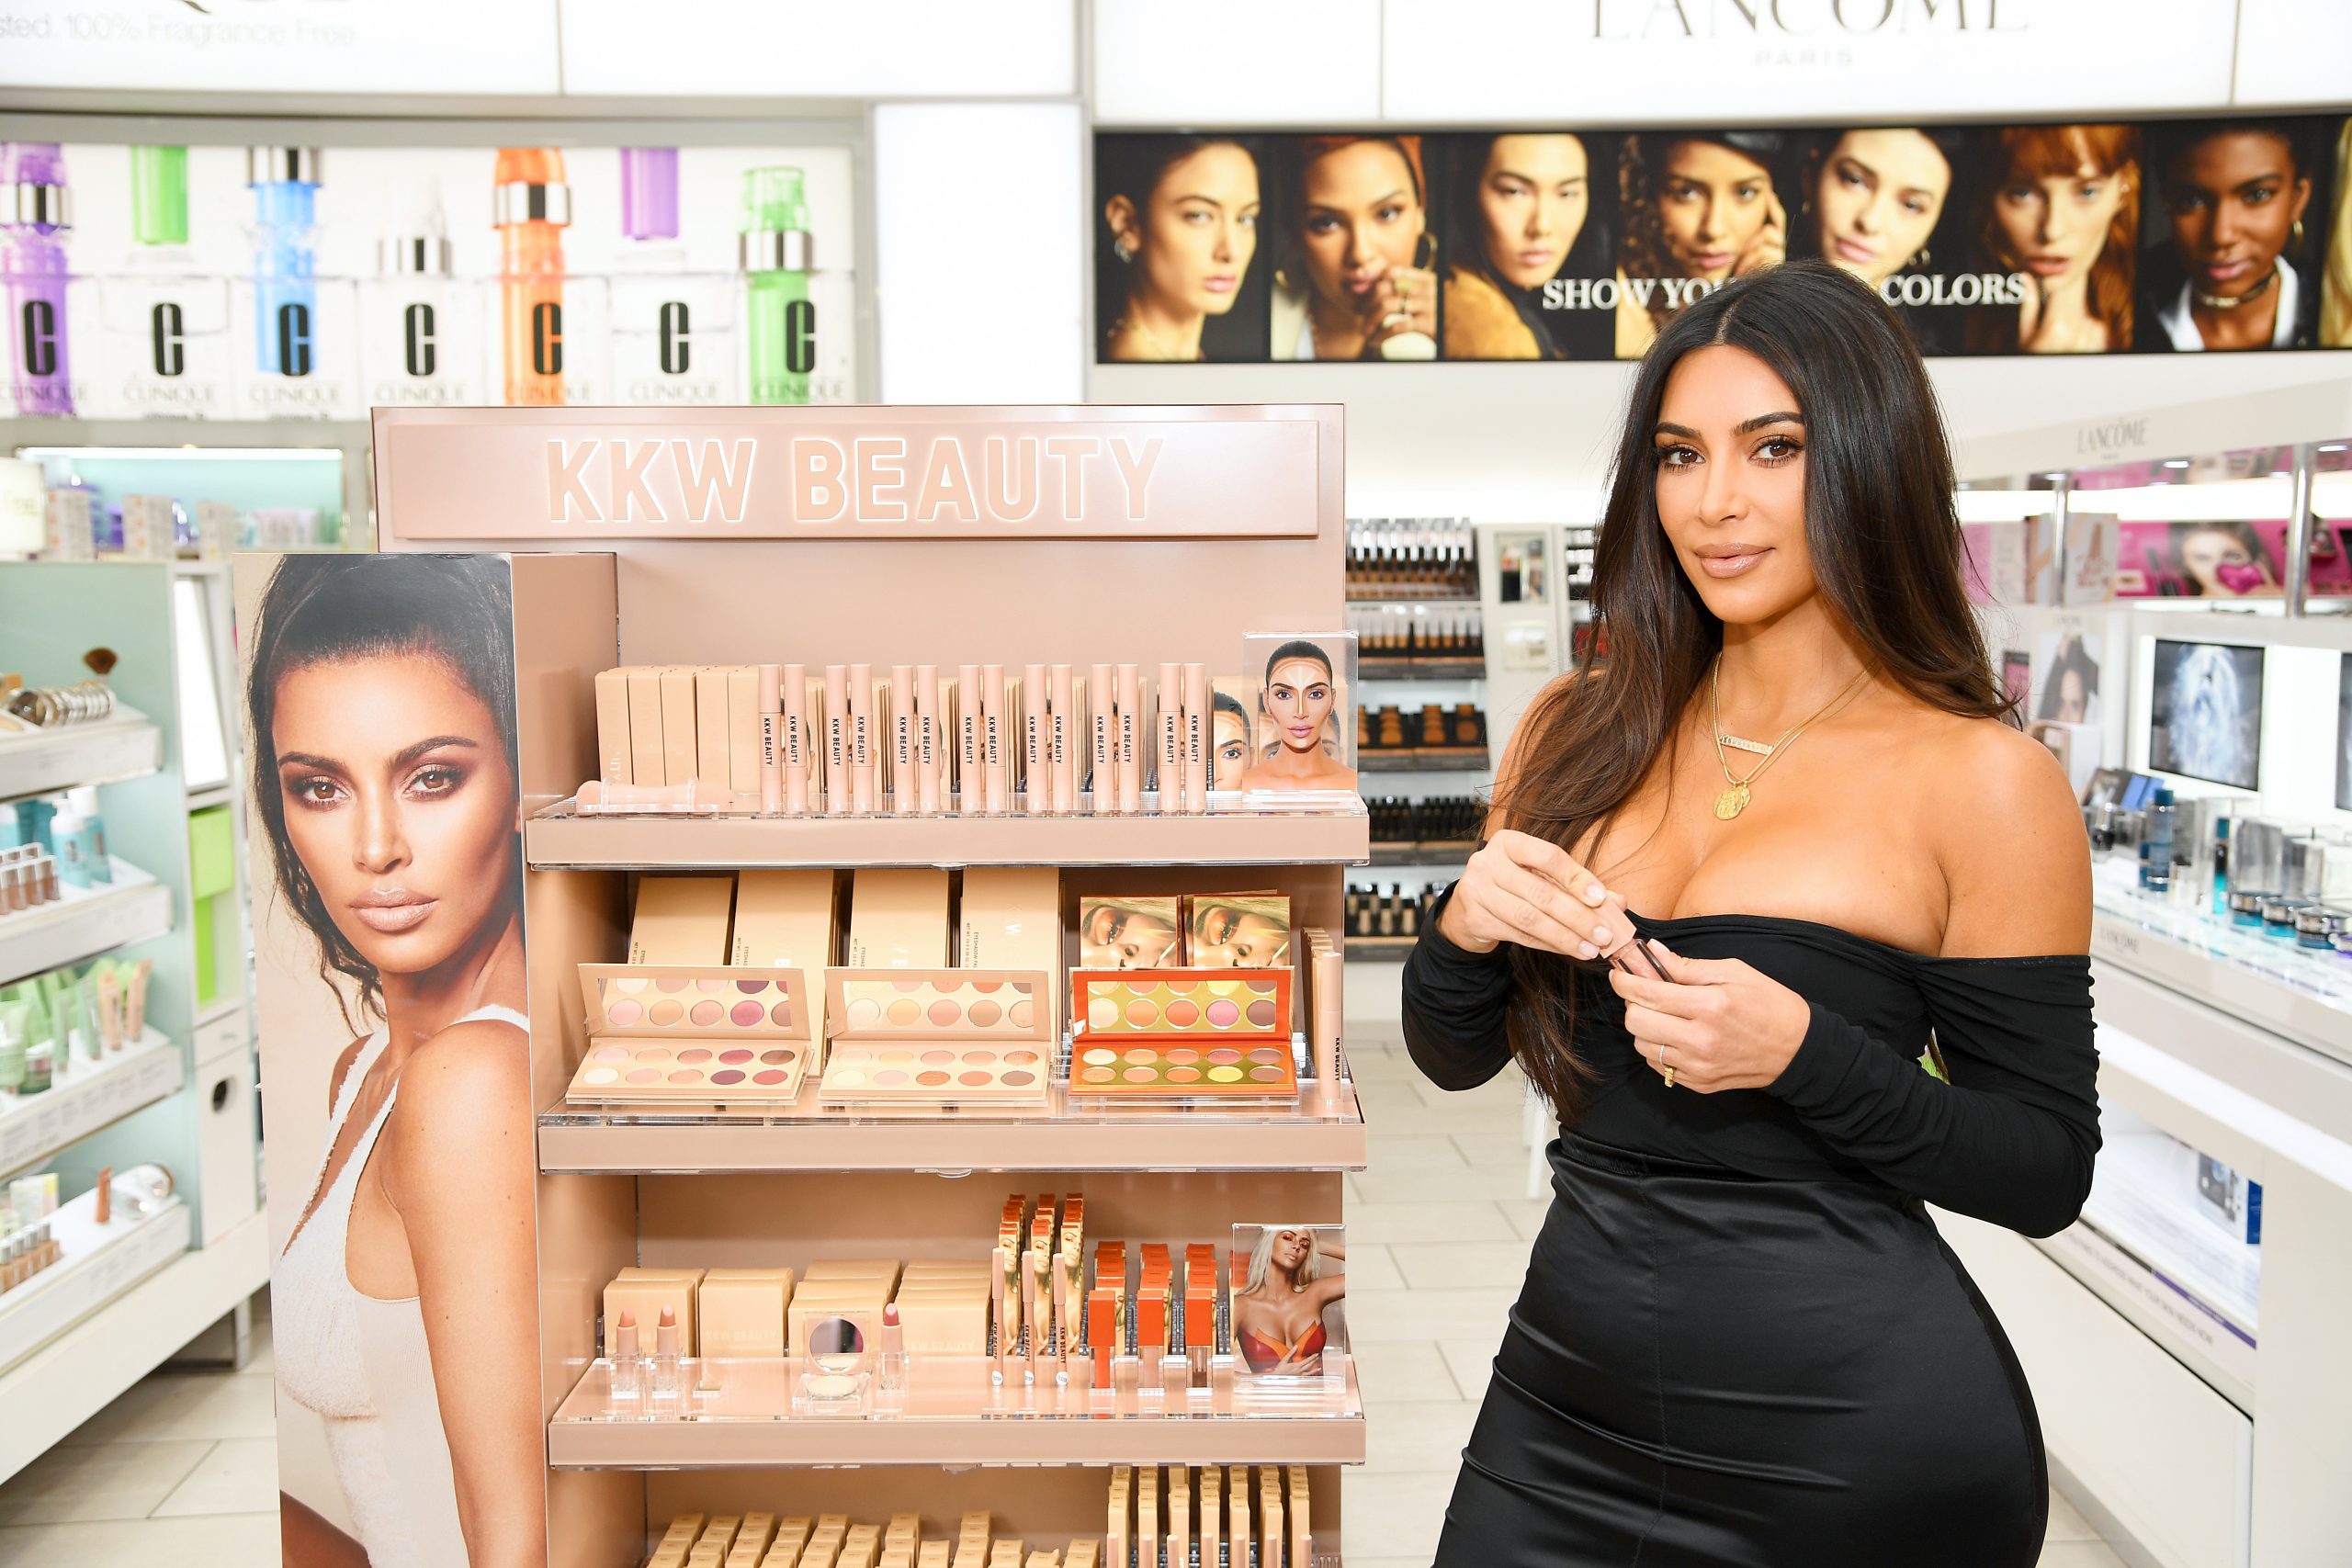 Does Kim Kardashian Still Own KKW Beauty?